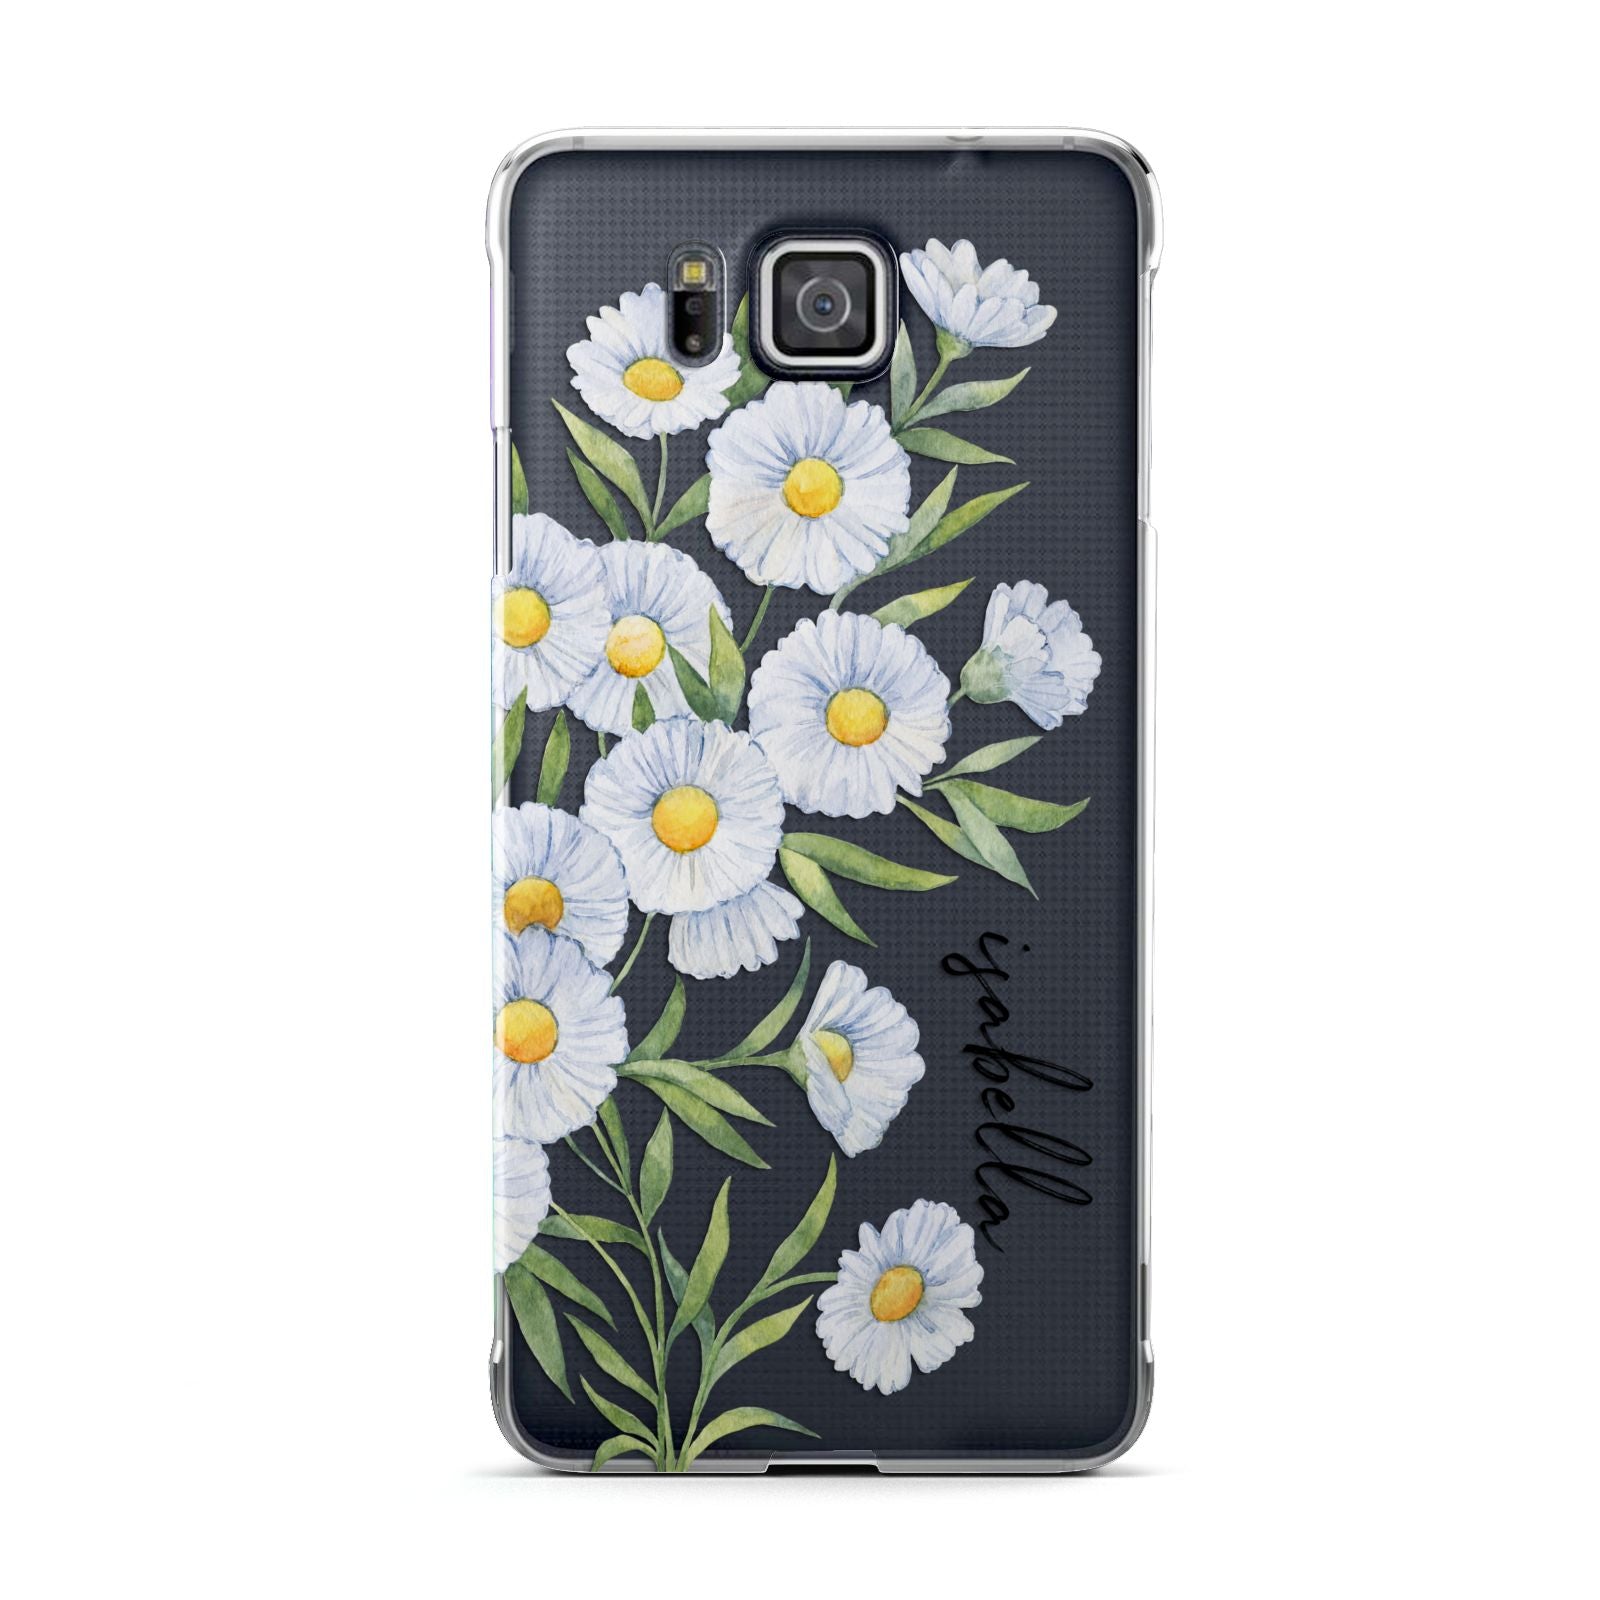 Personalised Daisy Flower Samsung Galaxy Alpha Case